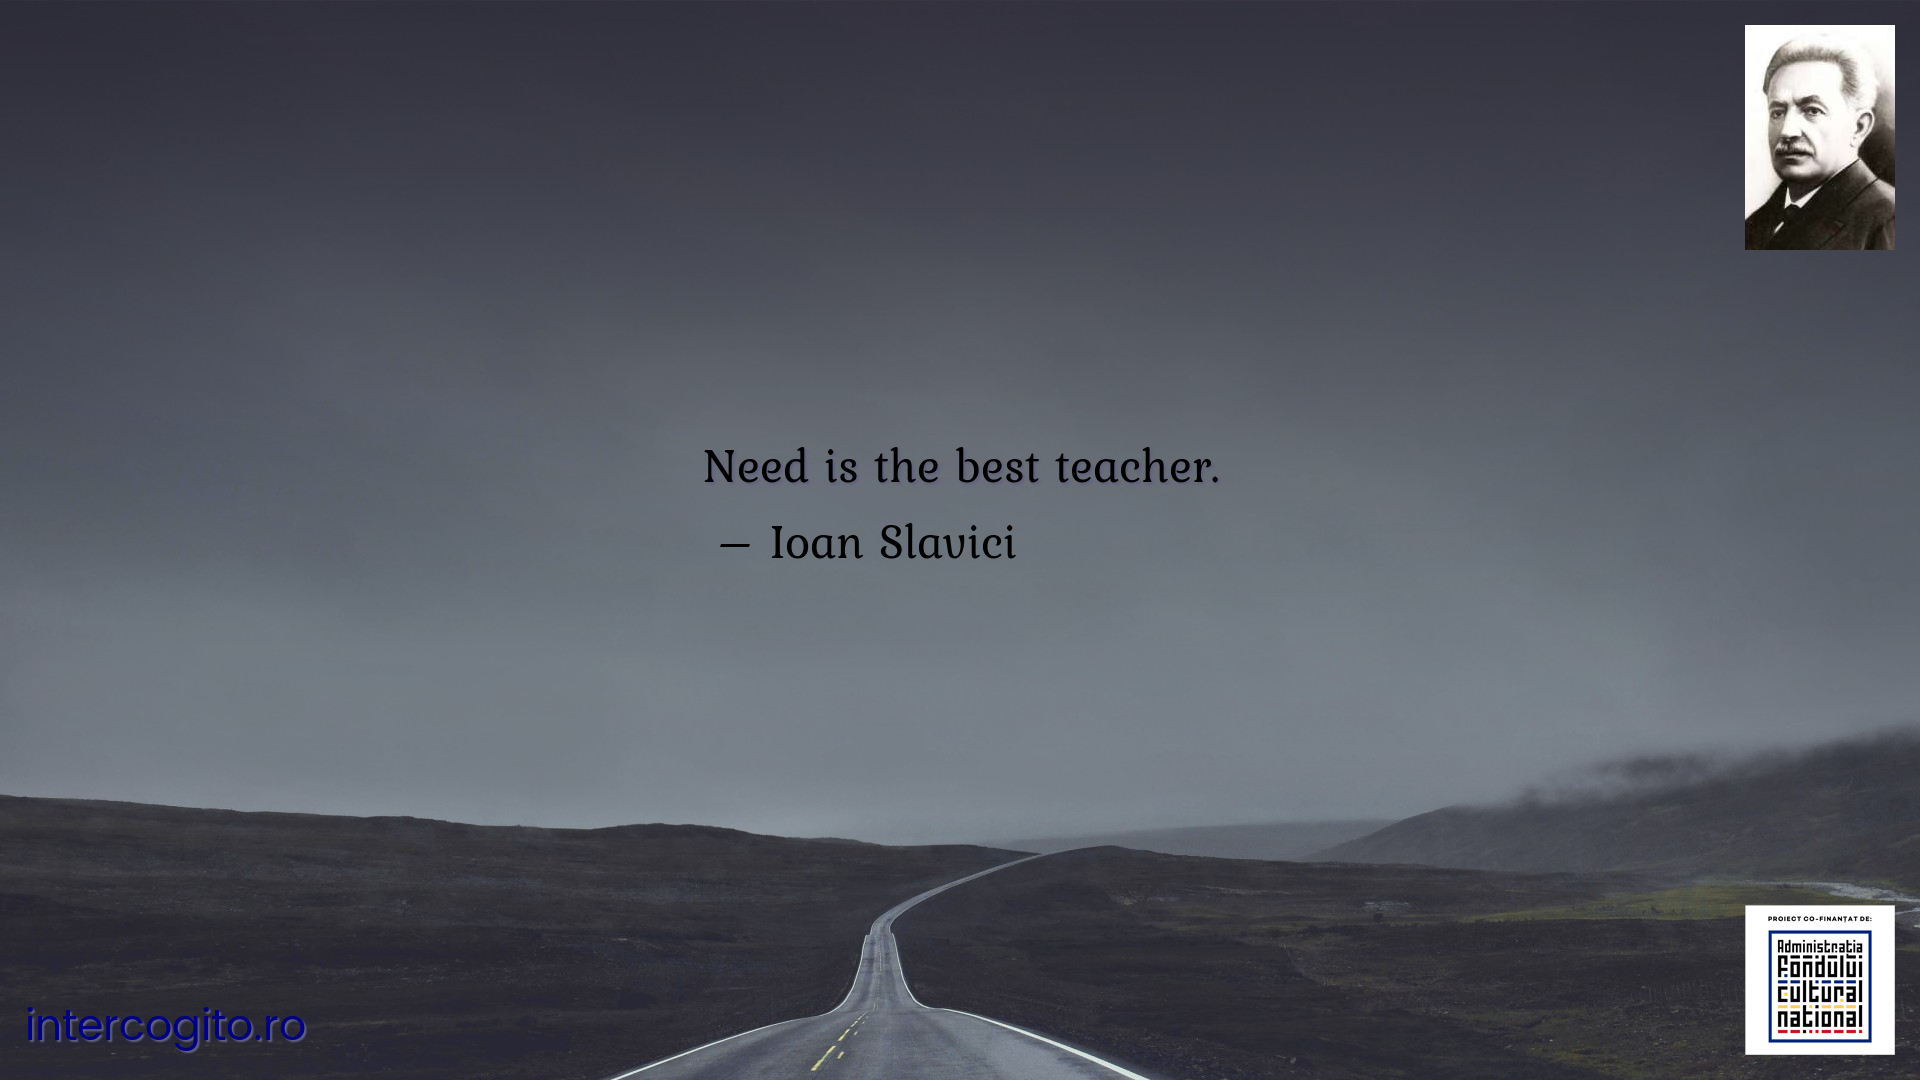 Need is the best teacher.